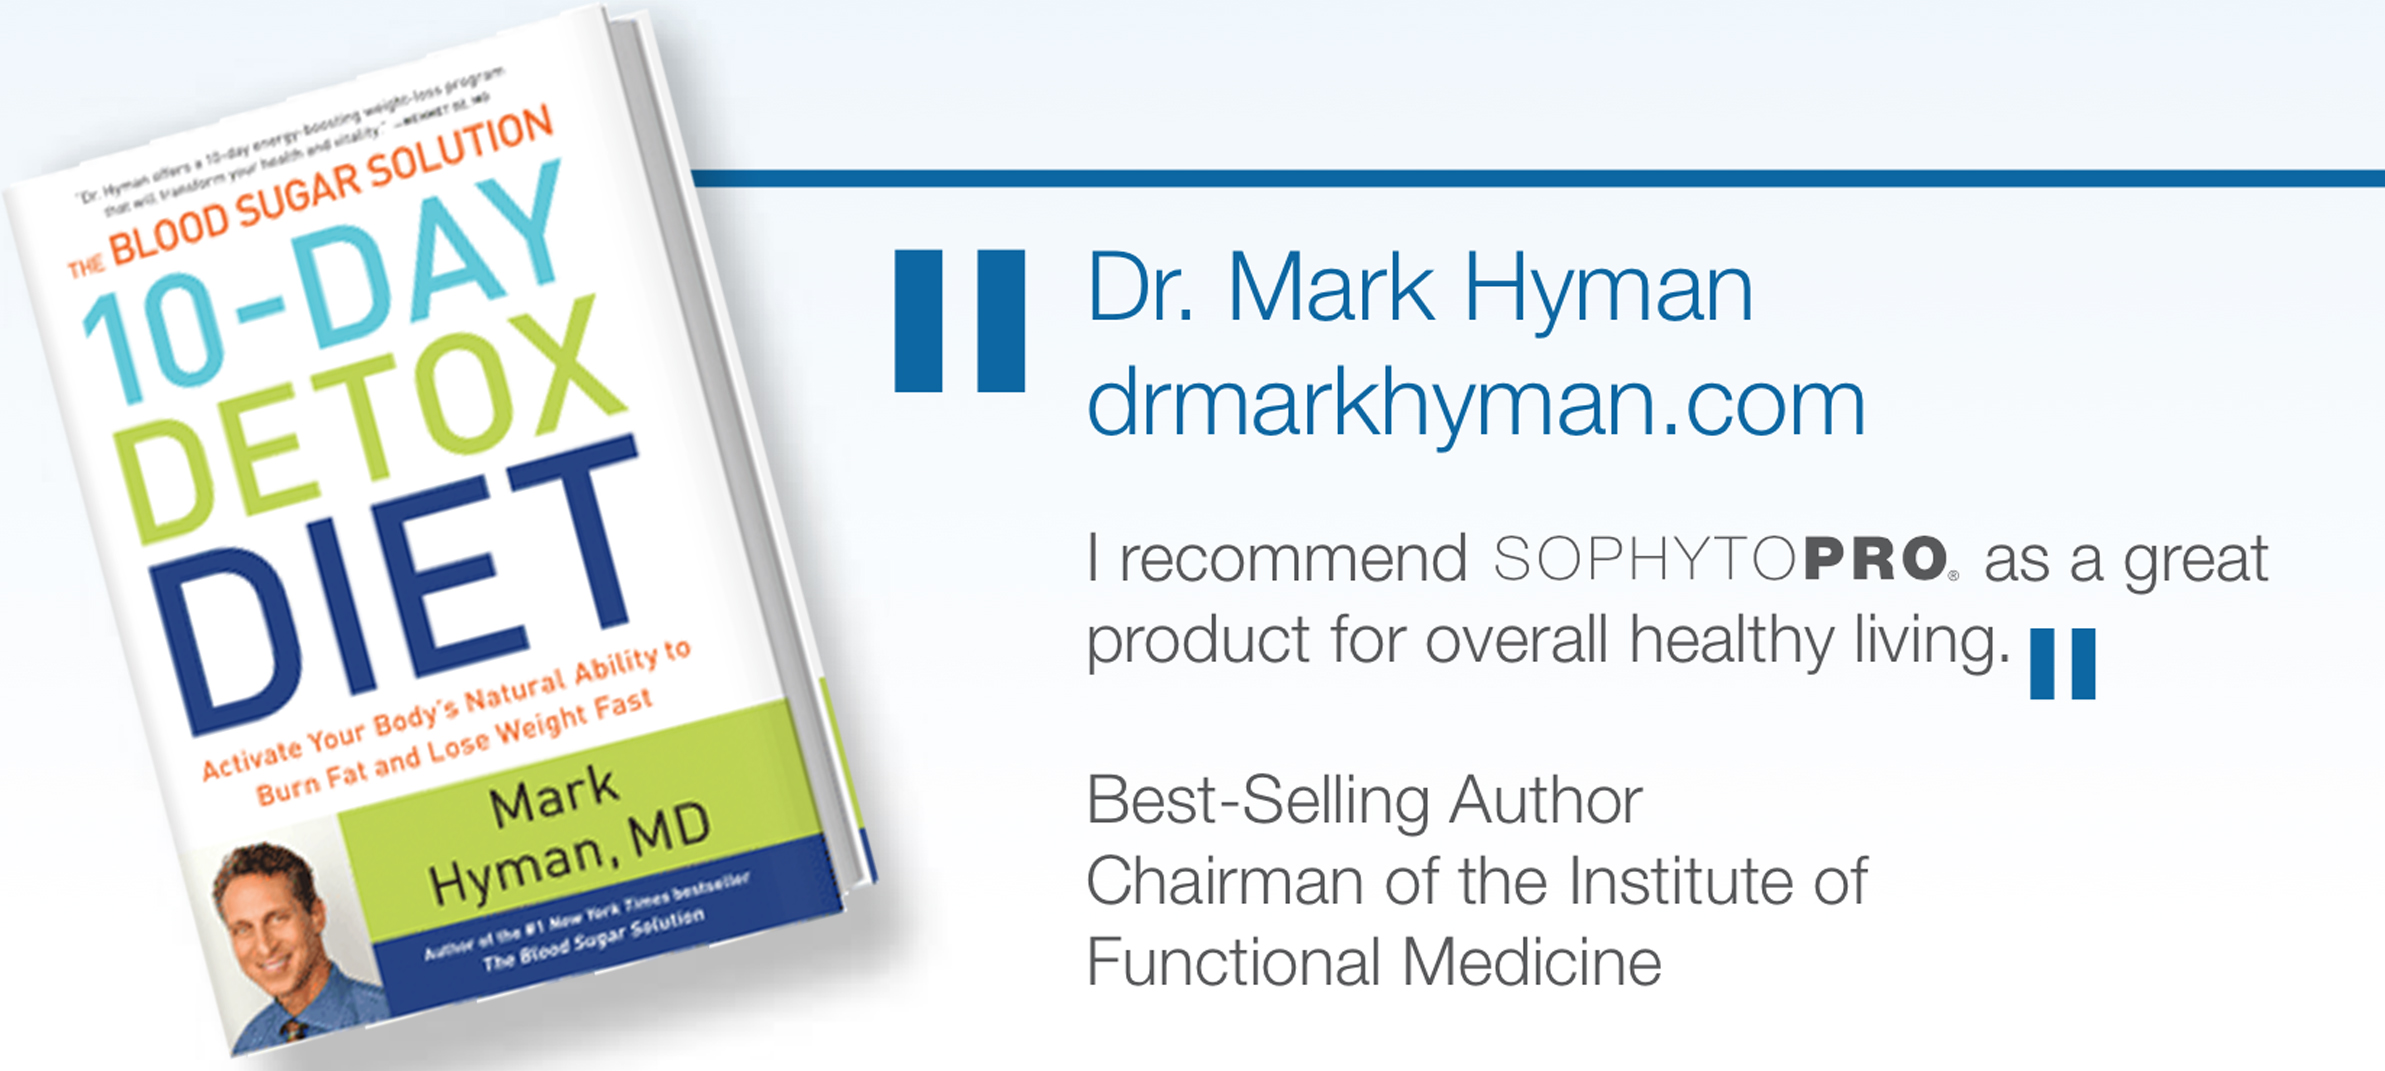 SoPHytPro skincare by Mark Hyman endorsment author of blood sugar solution